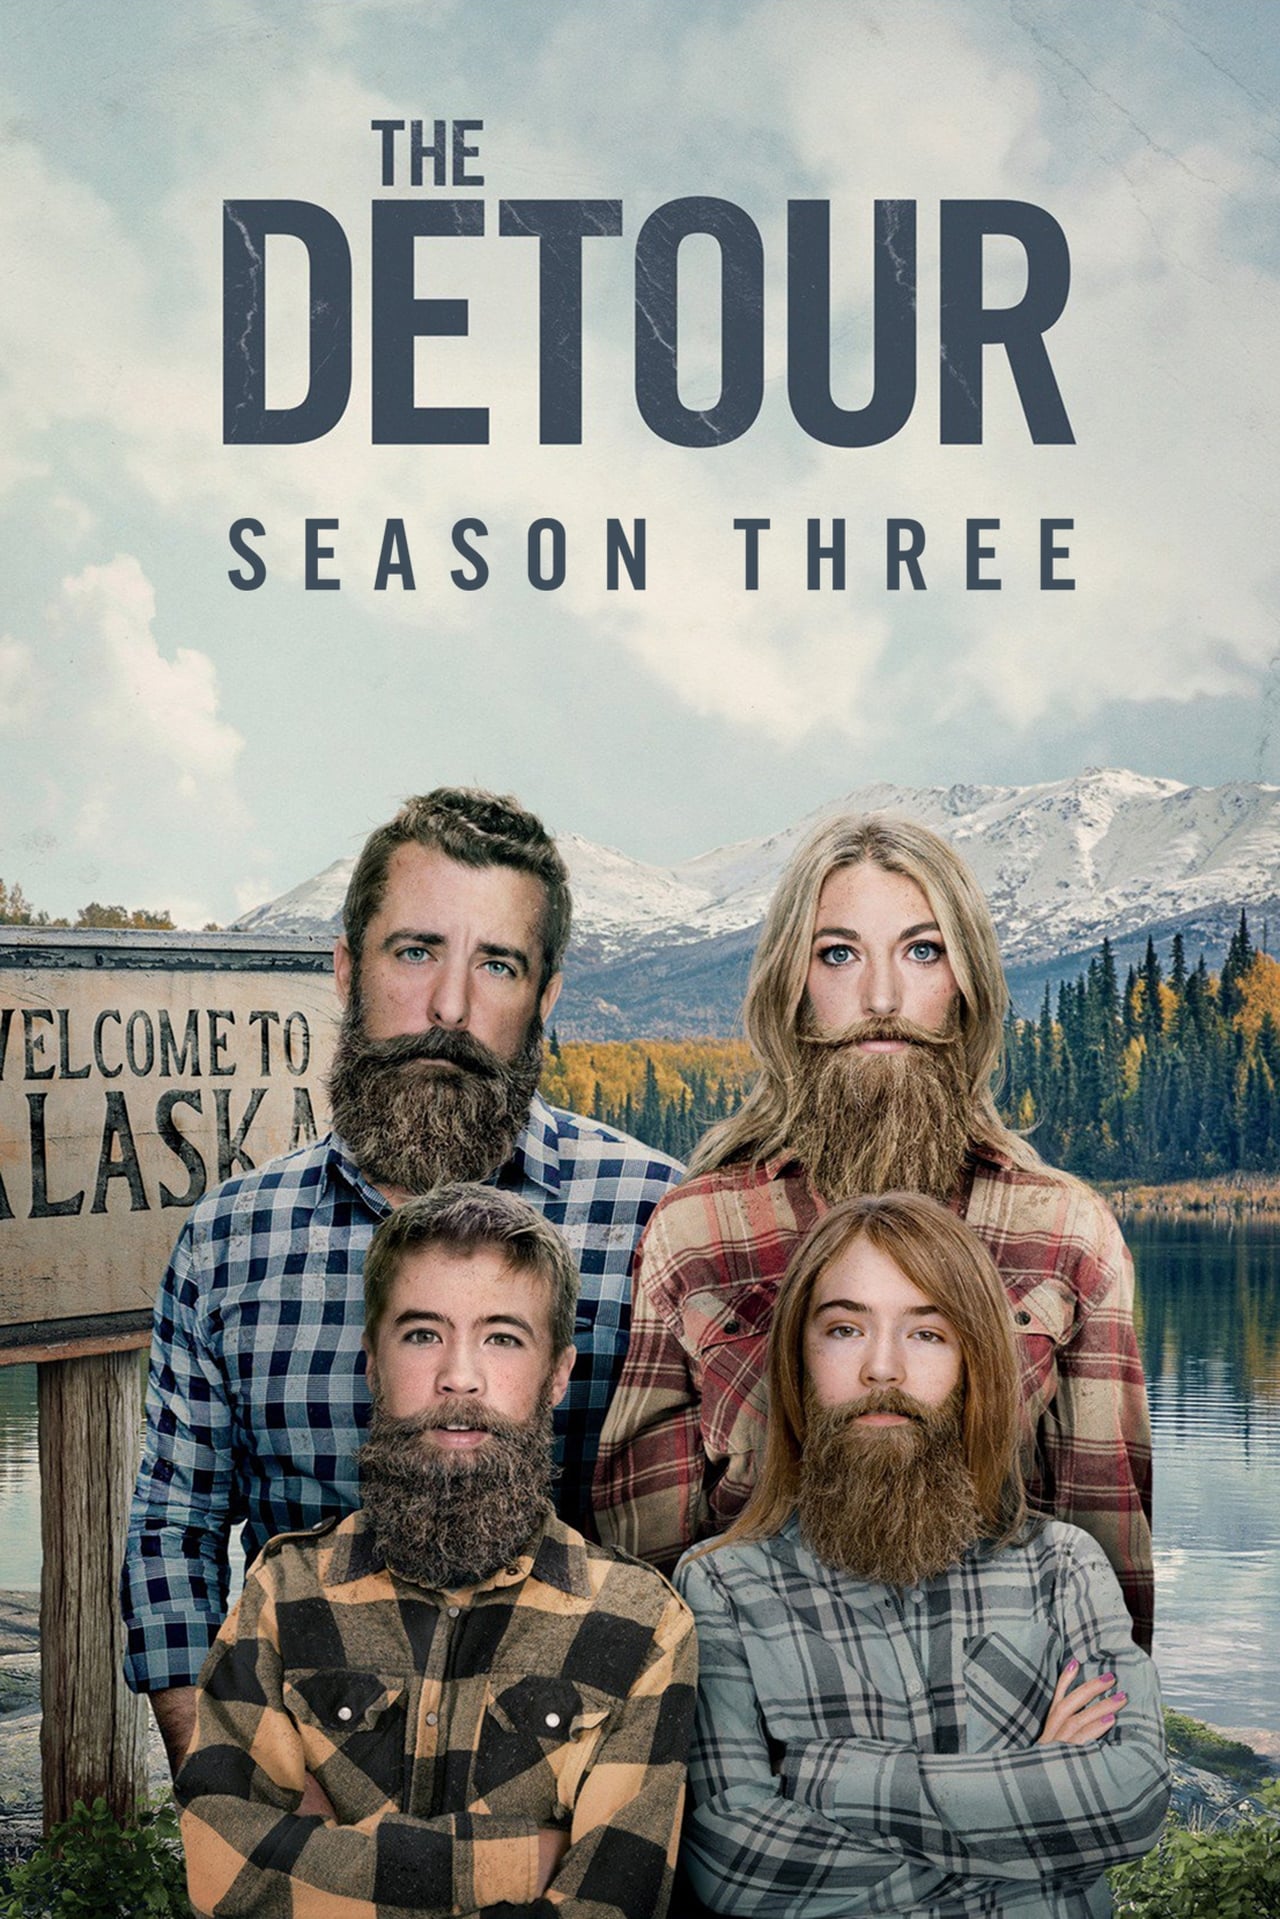 The Detour Season 3